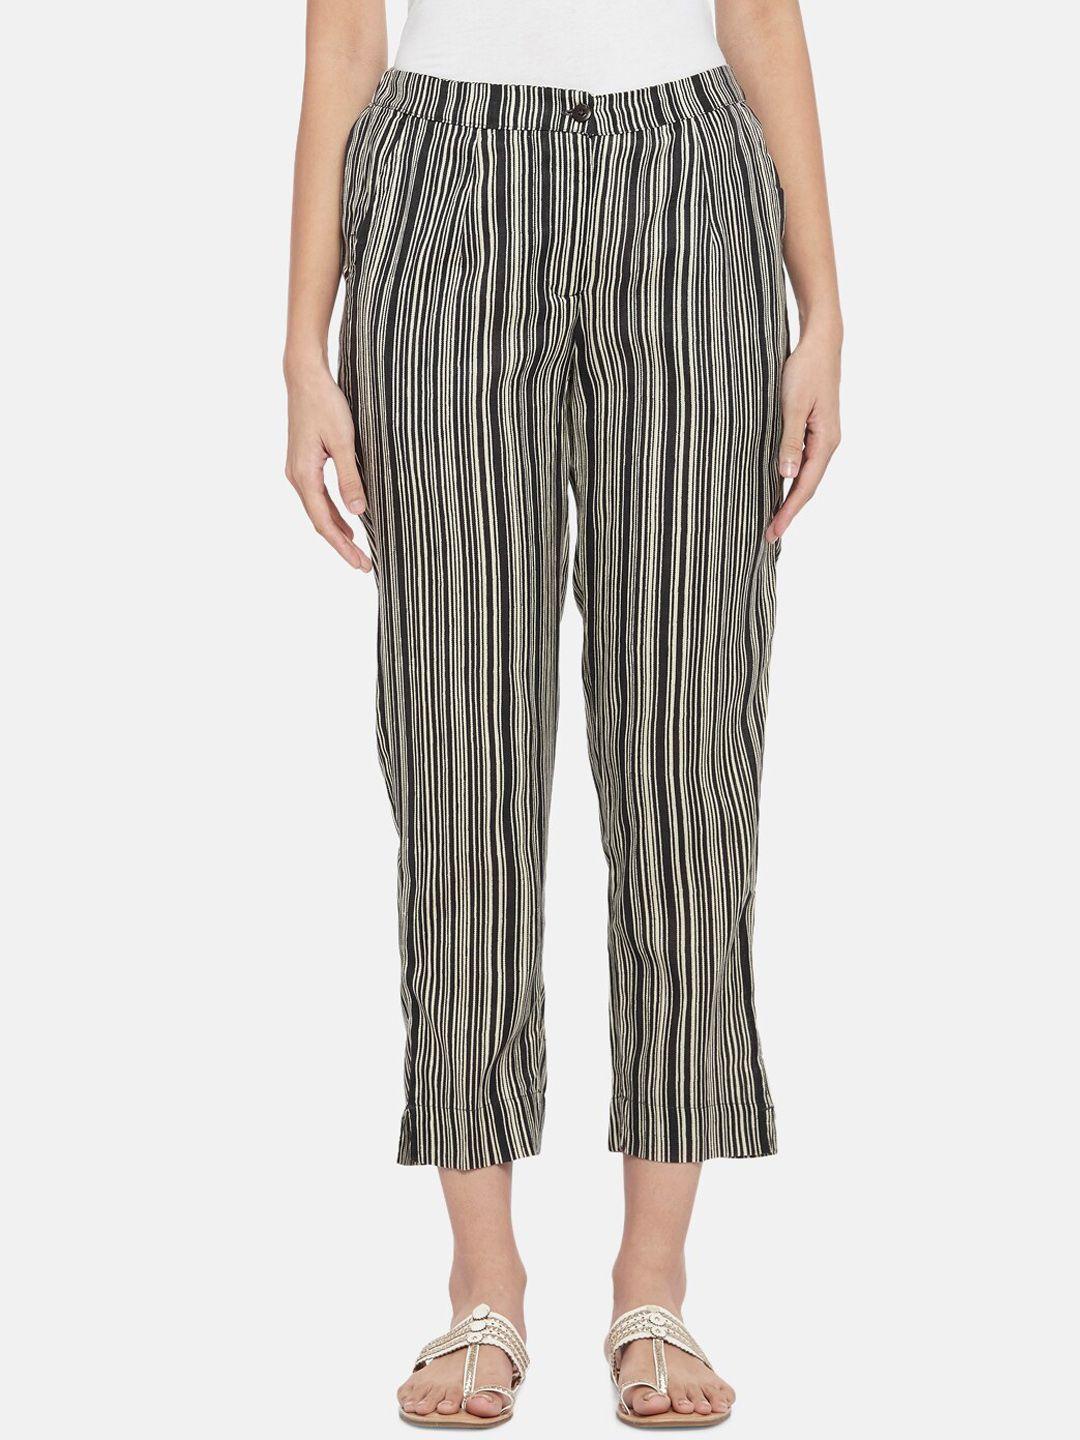 akkriti-by-pantaloons-women-charcoal-striped-regular-fit-trousers